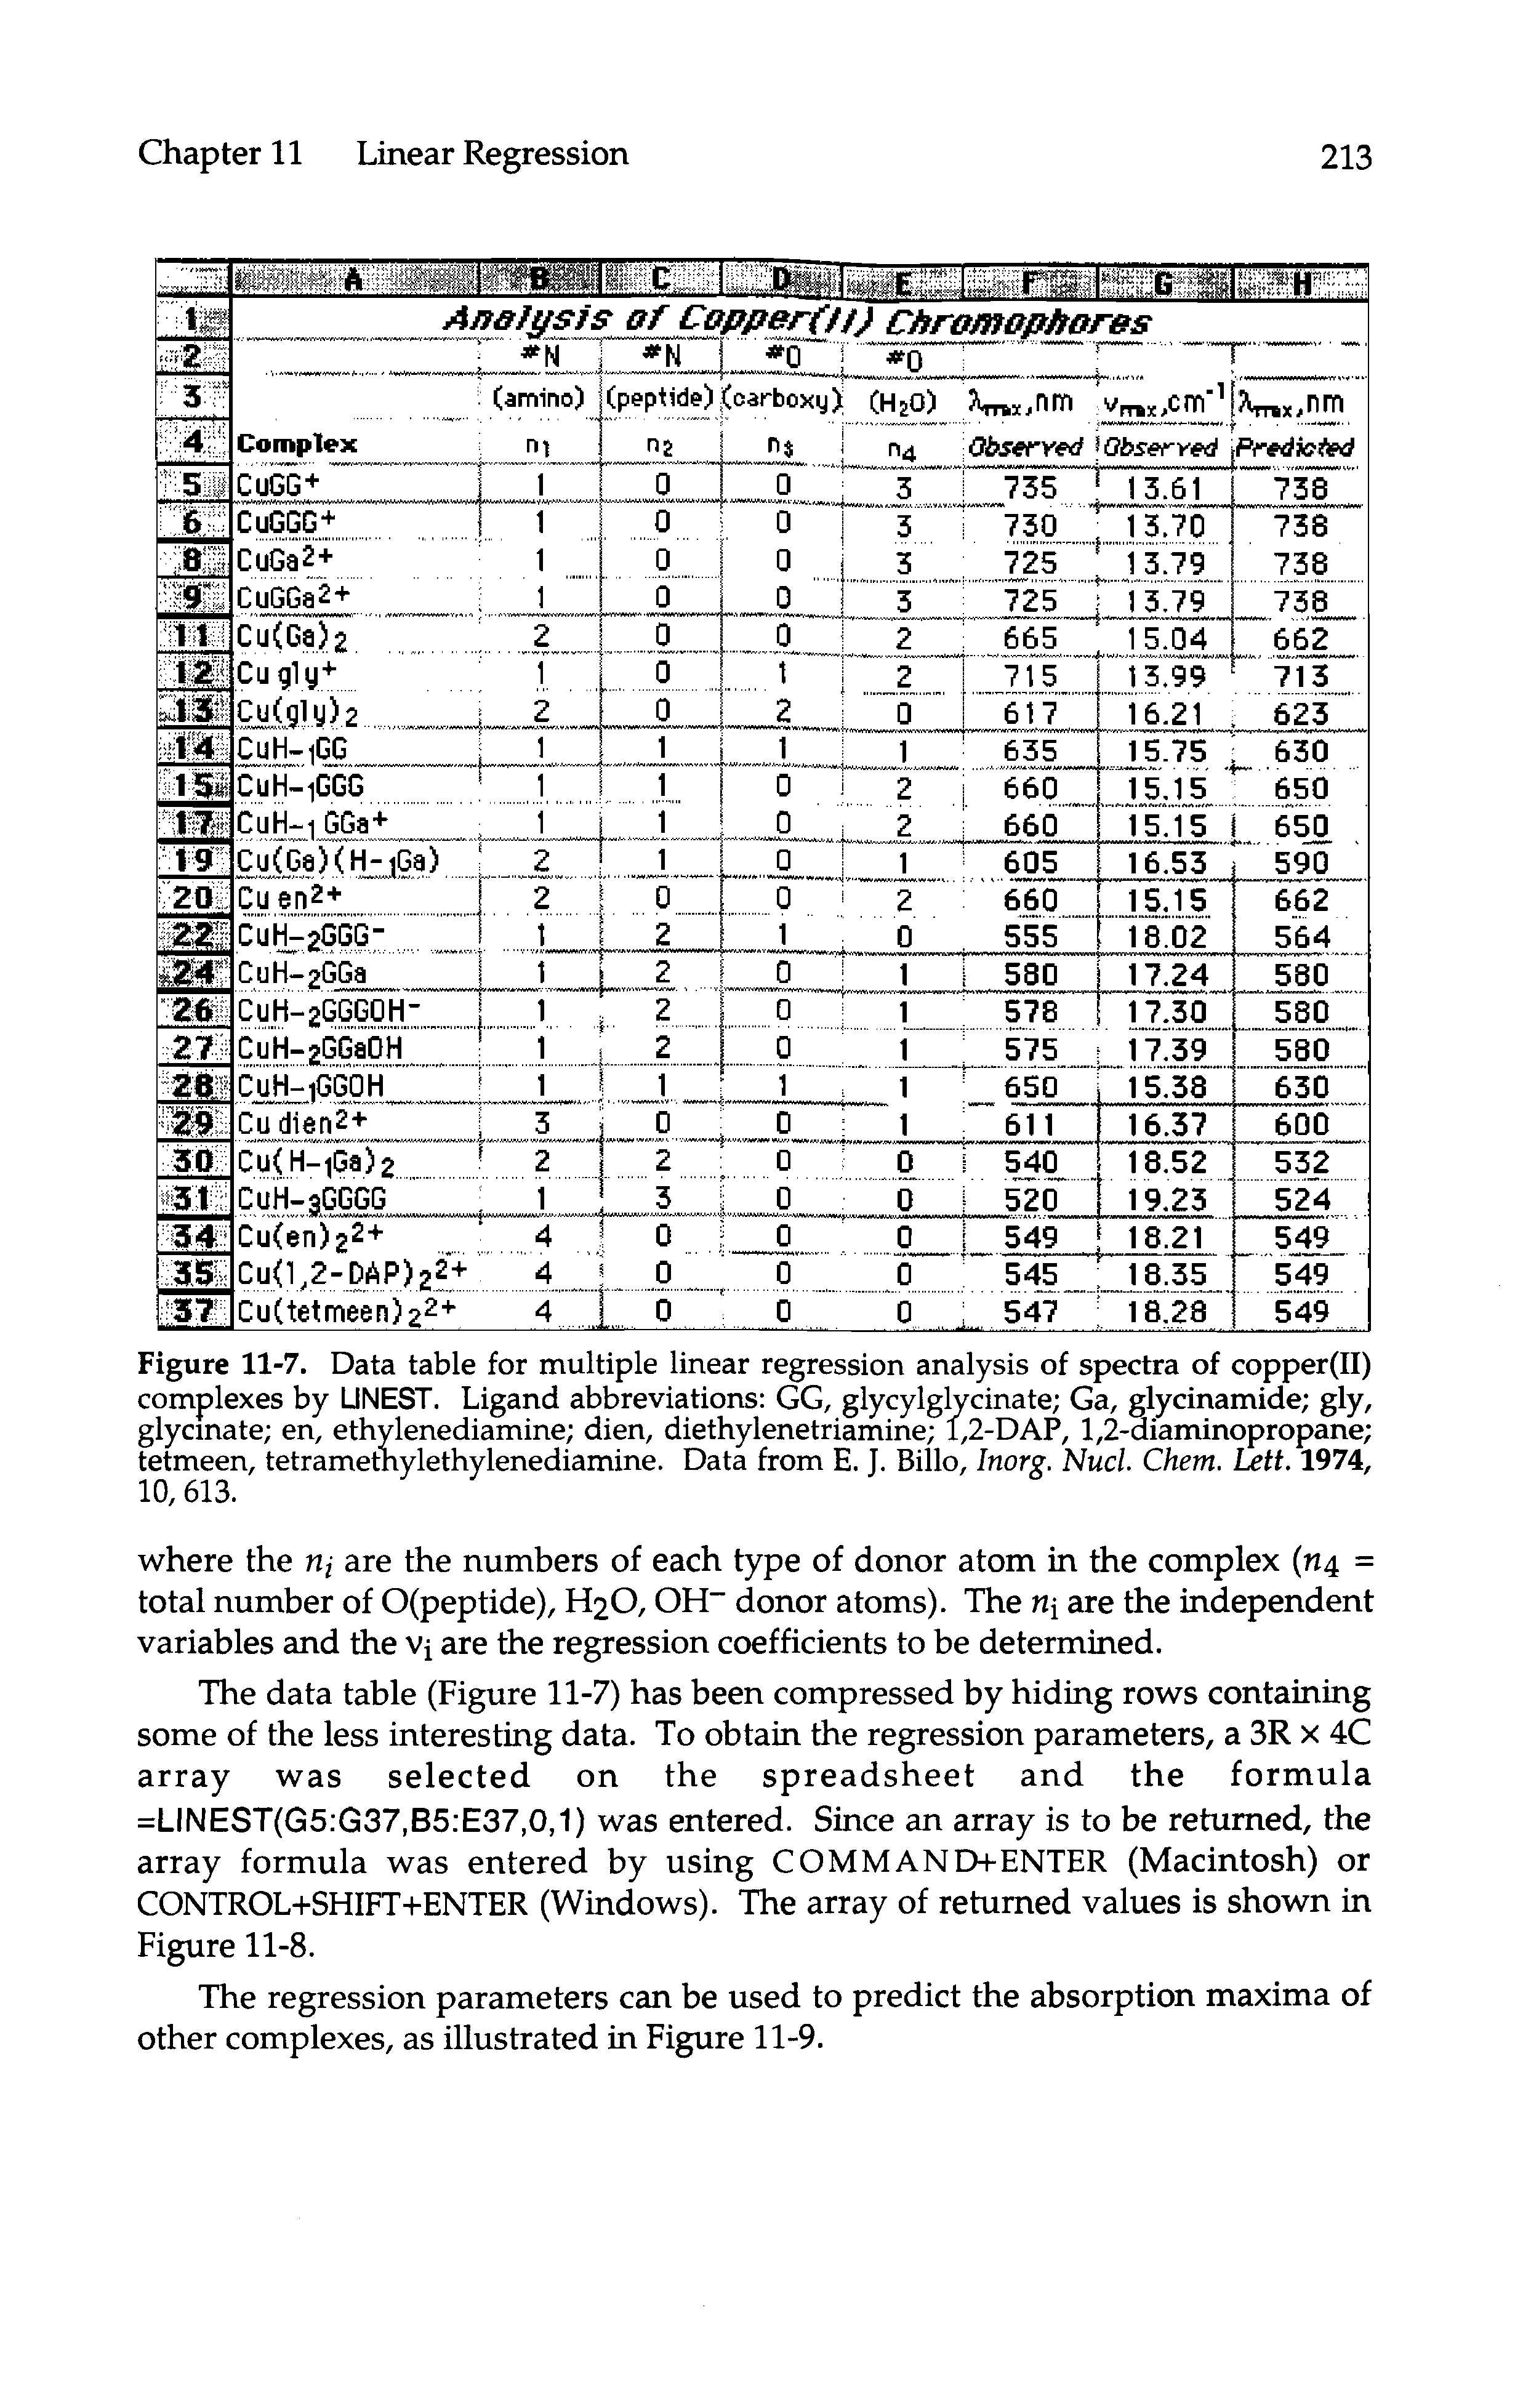 Figure 11-7. Data table for multiple linear regression analysis of spectra of copper(II) complexes by UNEST. Ligand abbreviations GG, glycylglycinate Ga, glycinamide gly, glycinate en, ethylenediamine dien, diethylenetriamine 1,2-DAP, 1,2-diaminopropane tetmeen, tetramefnylethylenediamine. Data from E. J. Billo, Inorg. Nucl. Chem. Lett. 1974, 10, 613.